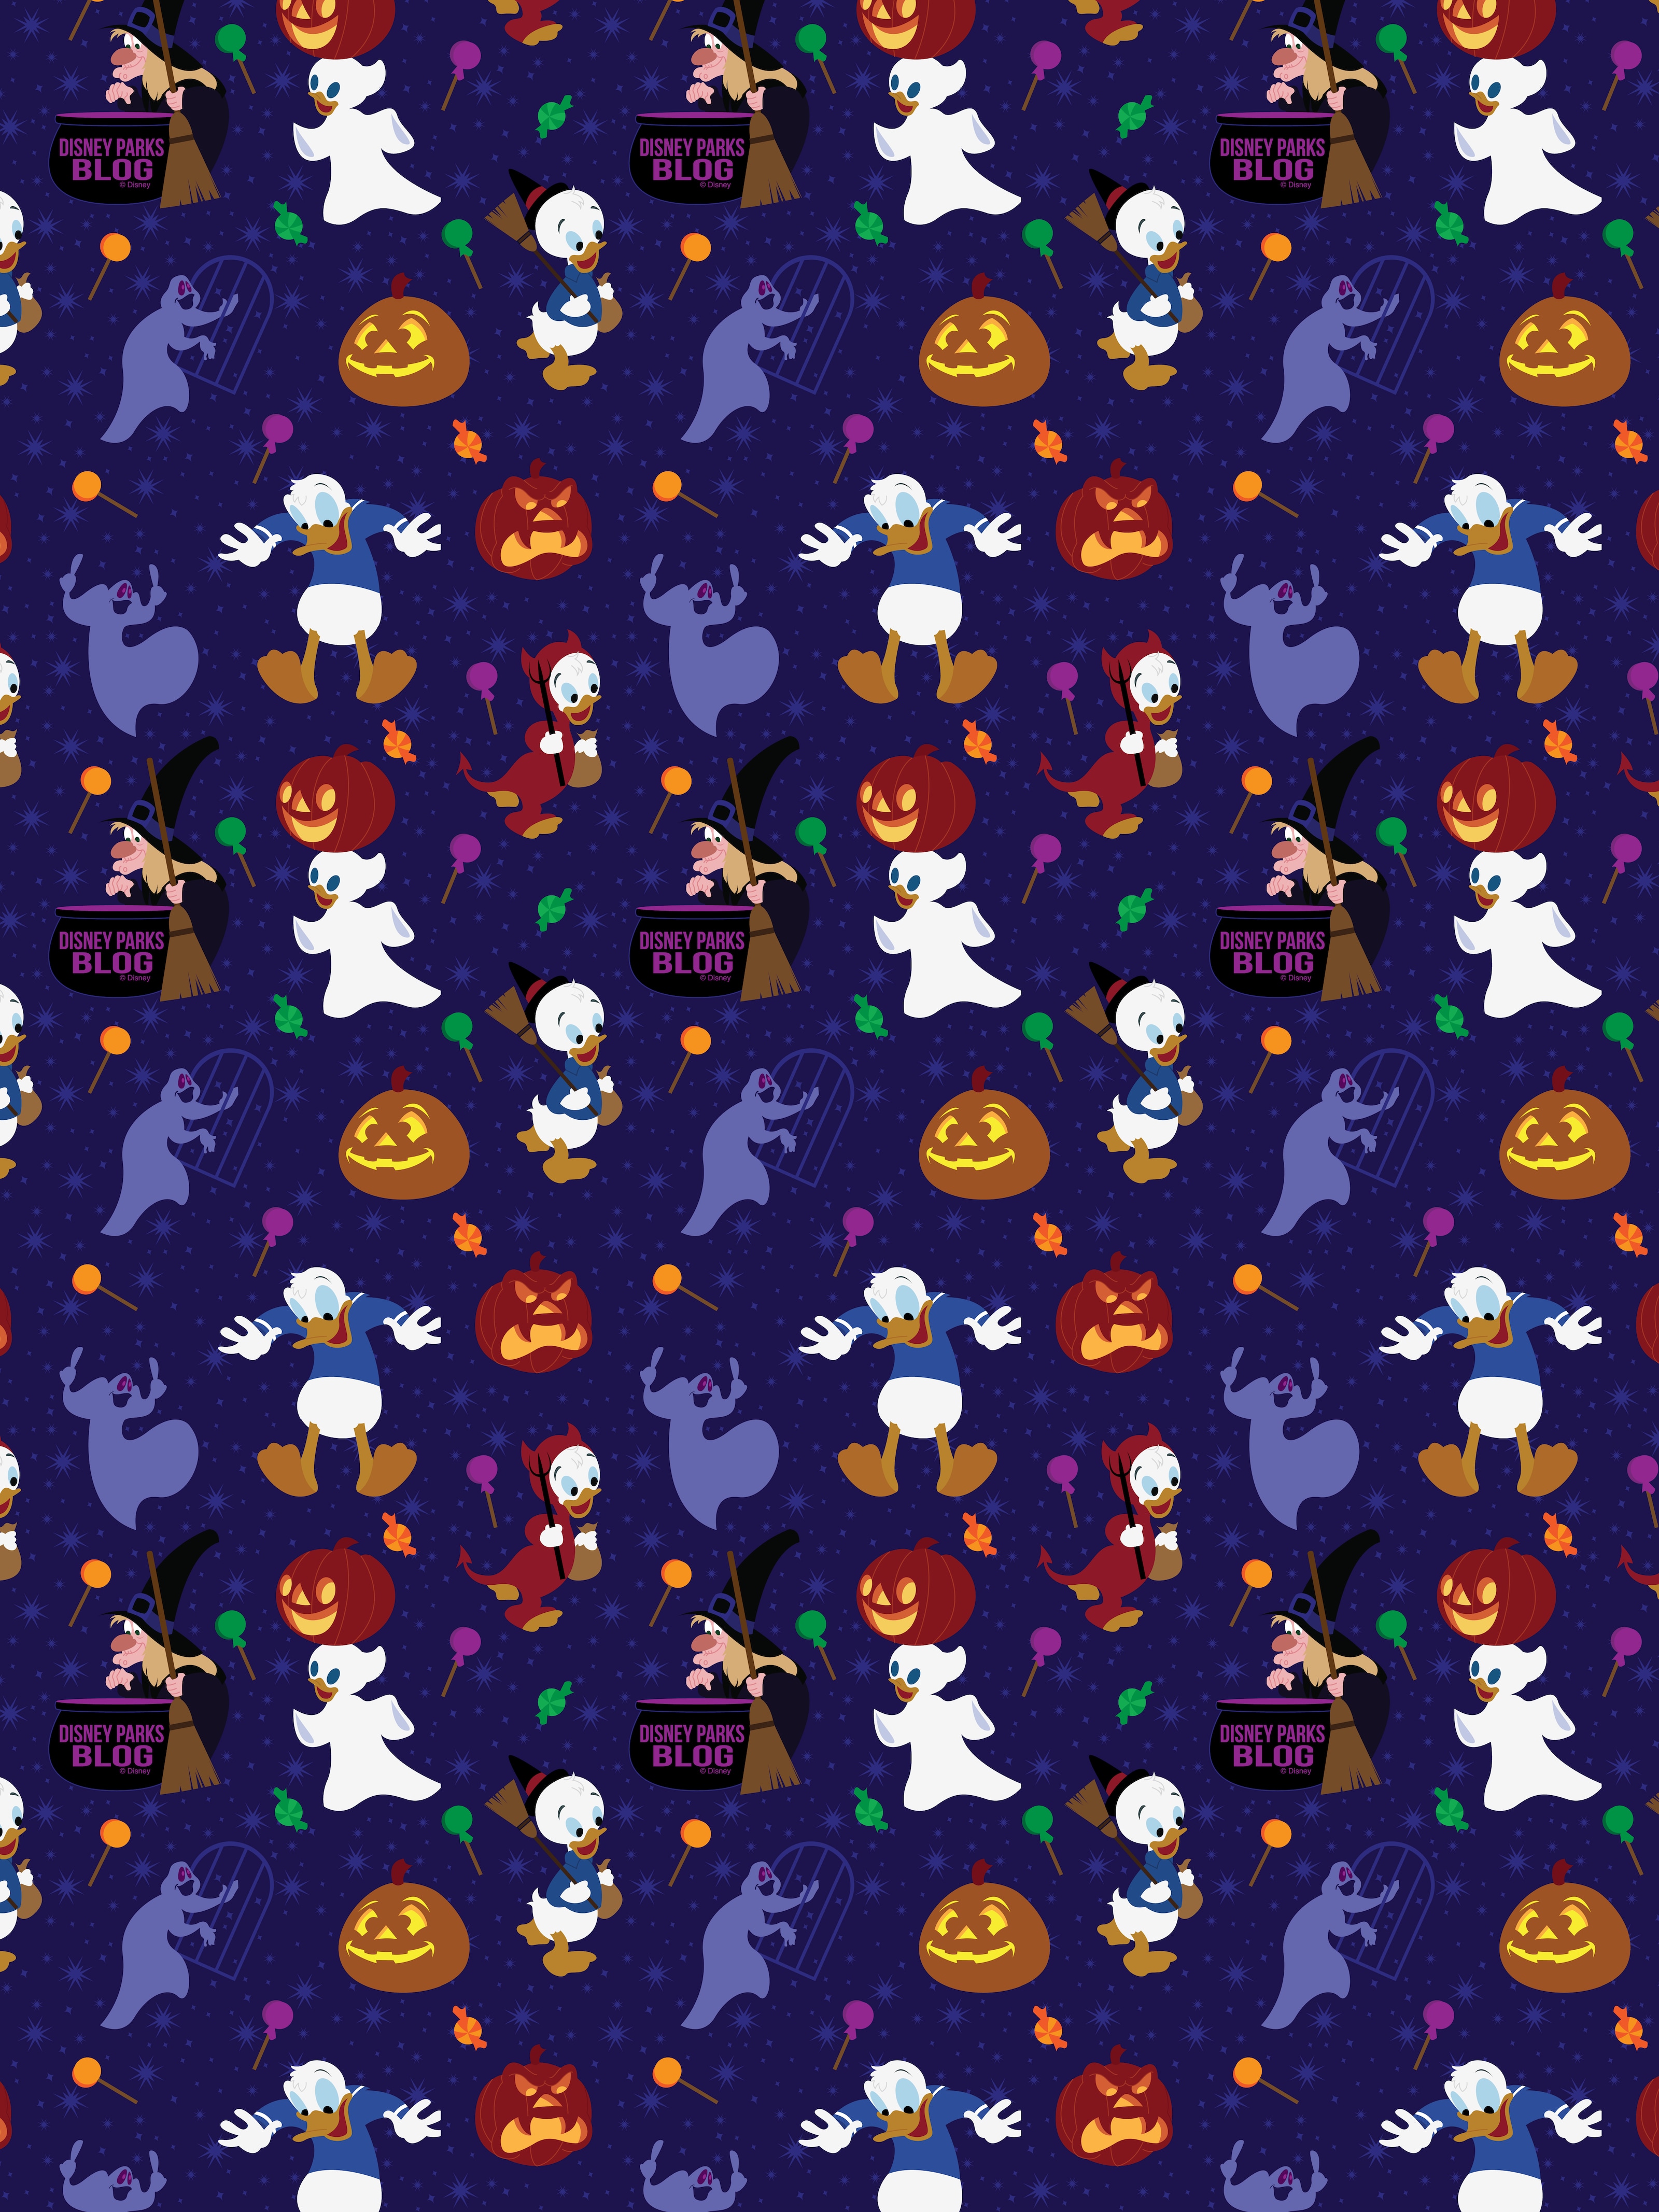 2019 Donald Duck Halloween Wallpaper Iphone Android Disney Parks Blog